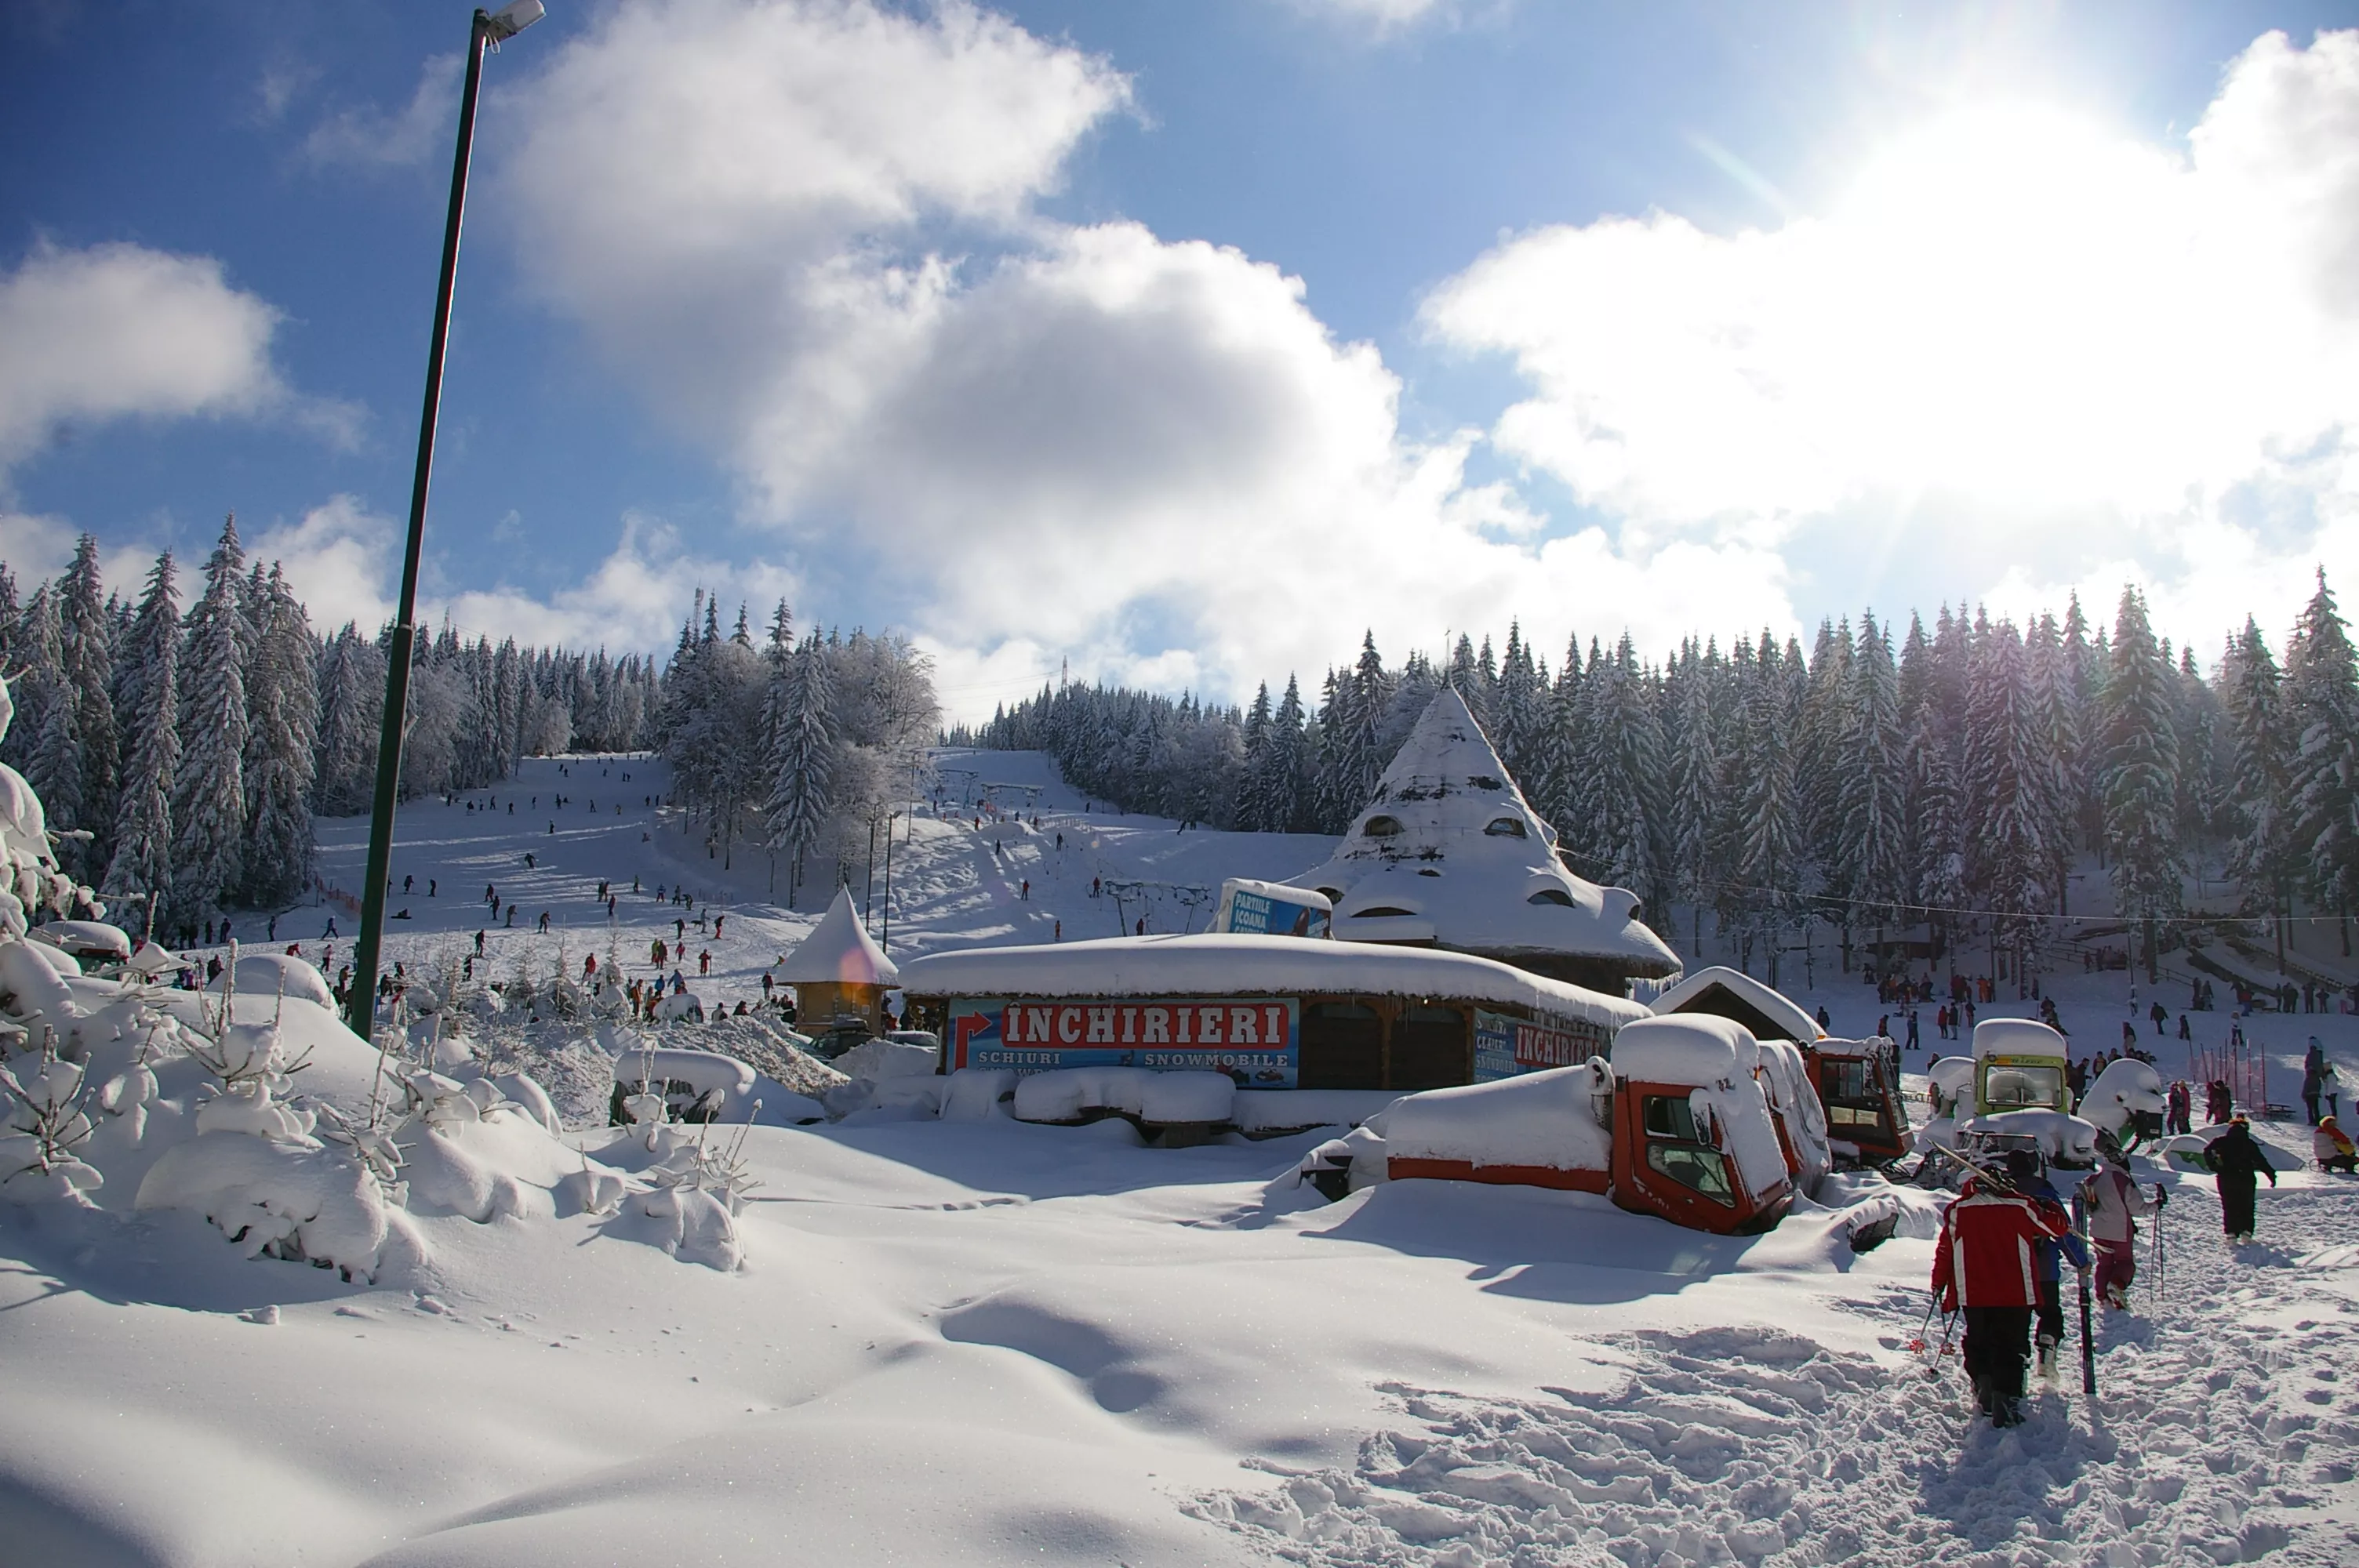 Partiile Roata Cavnic in Romania, Europe | Snowboarding,Skiing - Rated 3.7